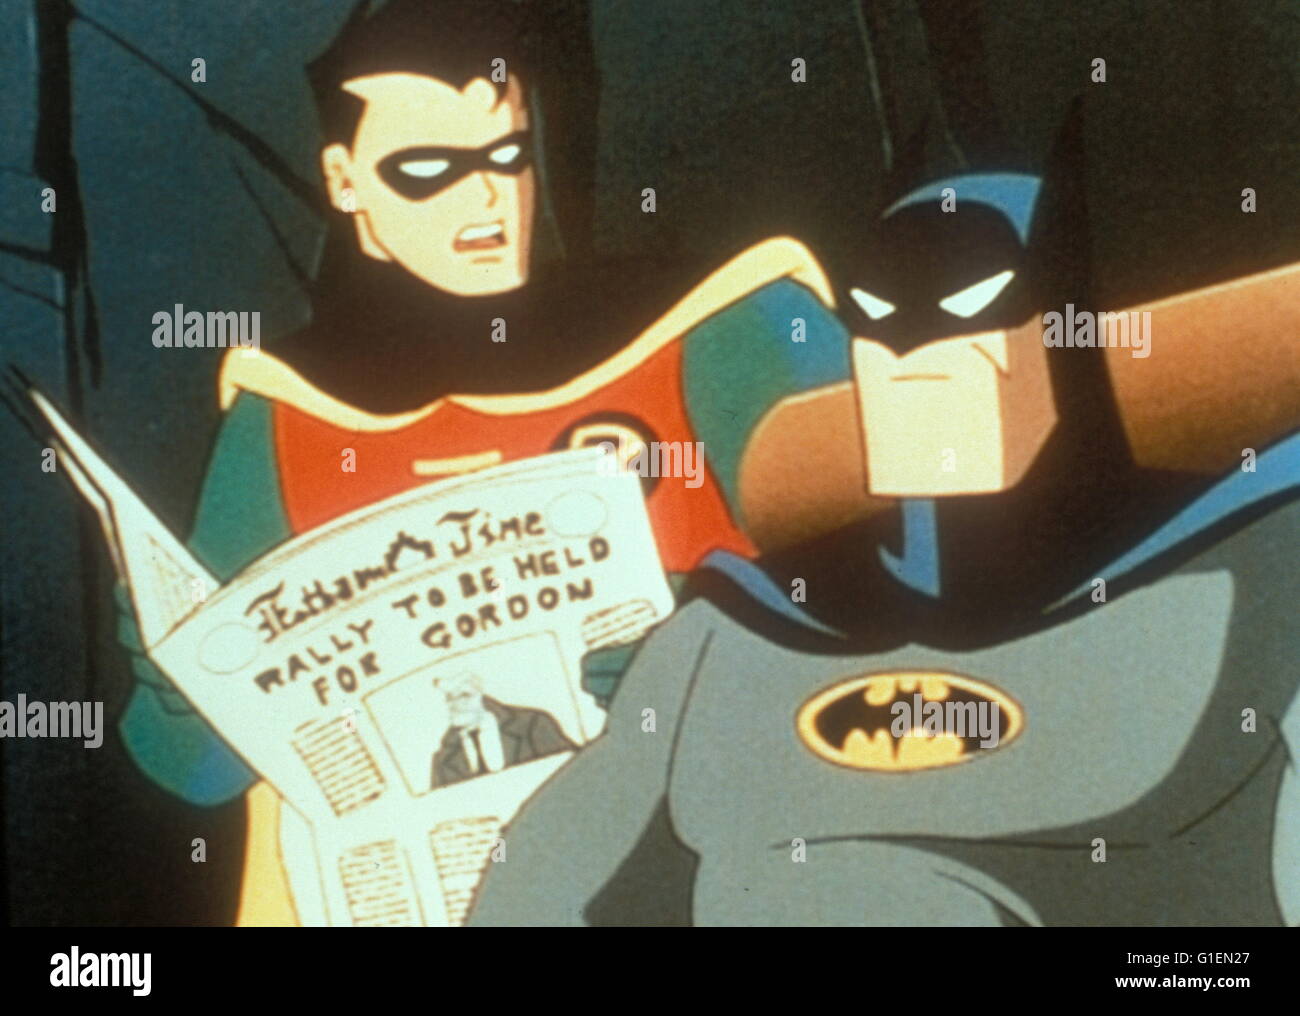 Batman & Robin / Batman and Robin - The Animated Series Stock Photo - Alamy